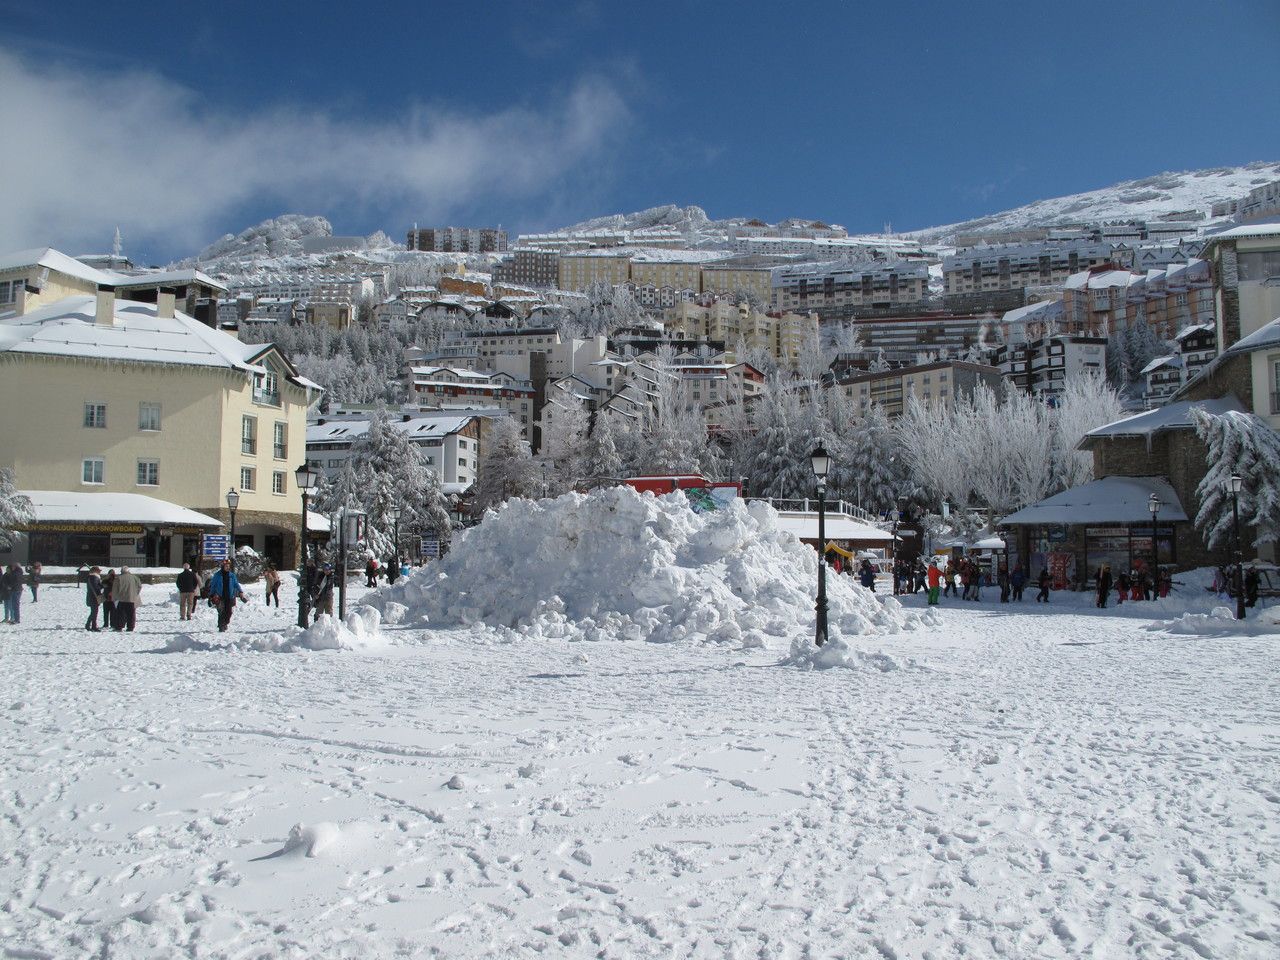 Sierra nevada